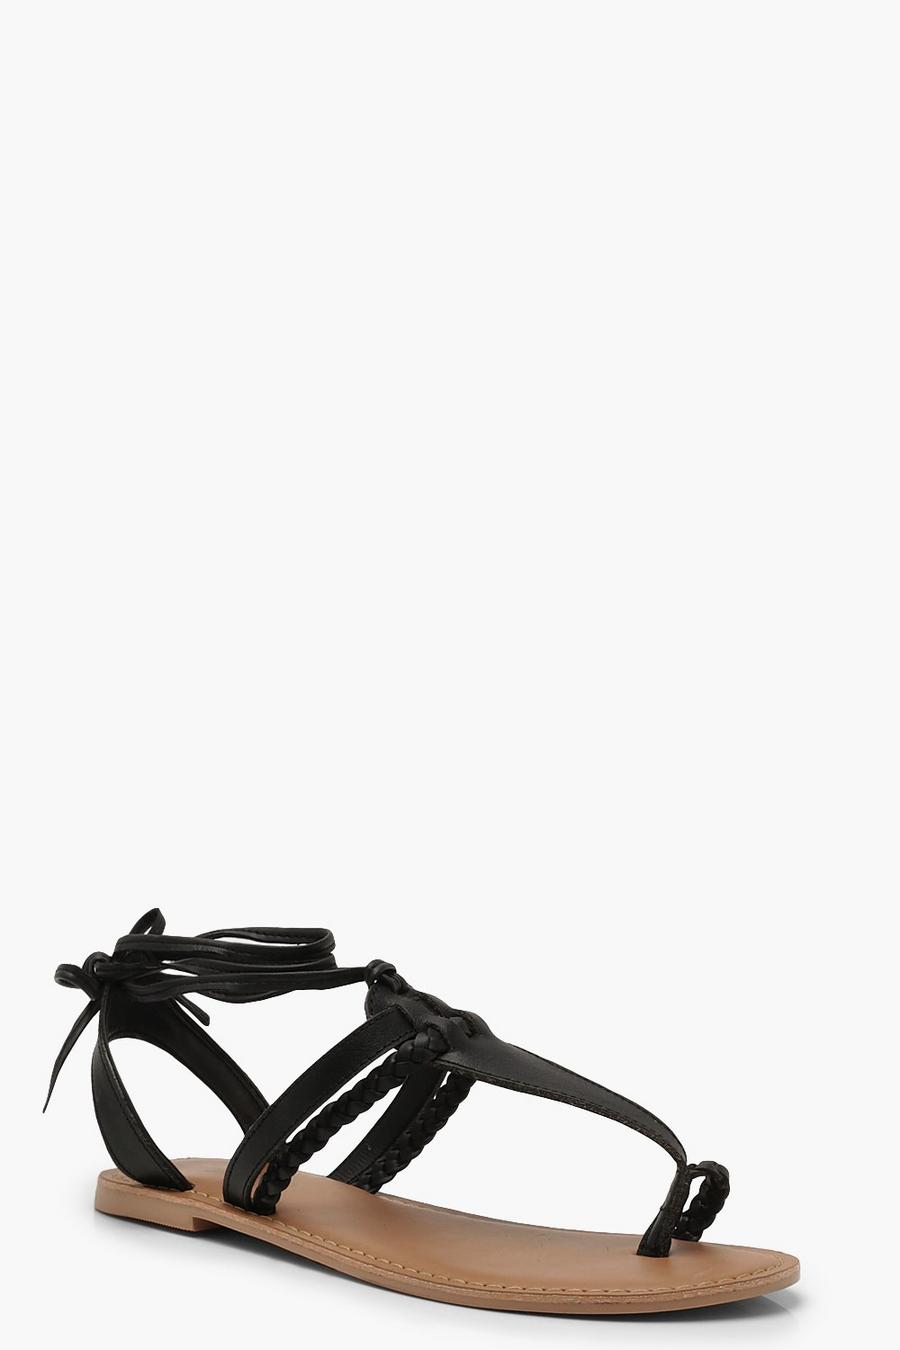 Black Leather Toe Post Ghillie Sandals image number 1